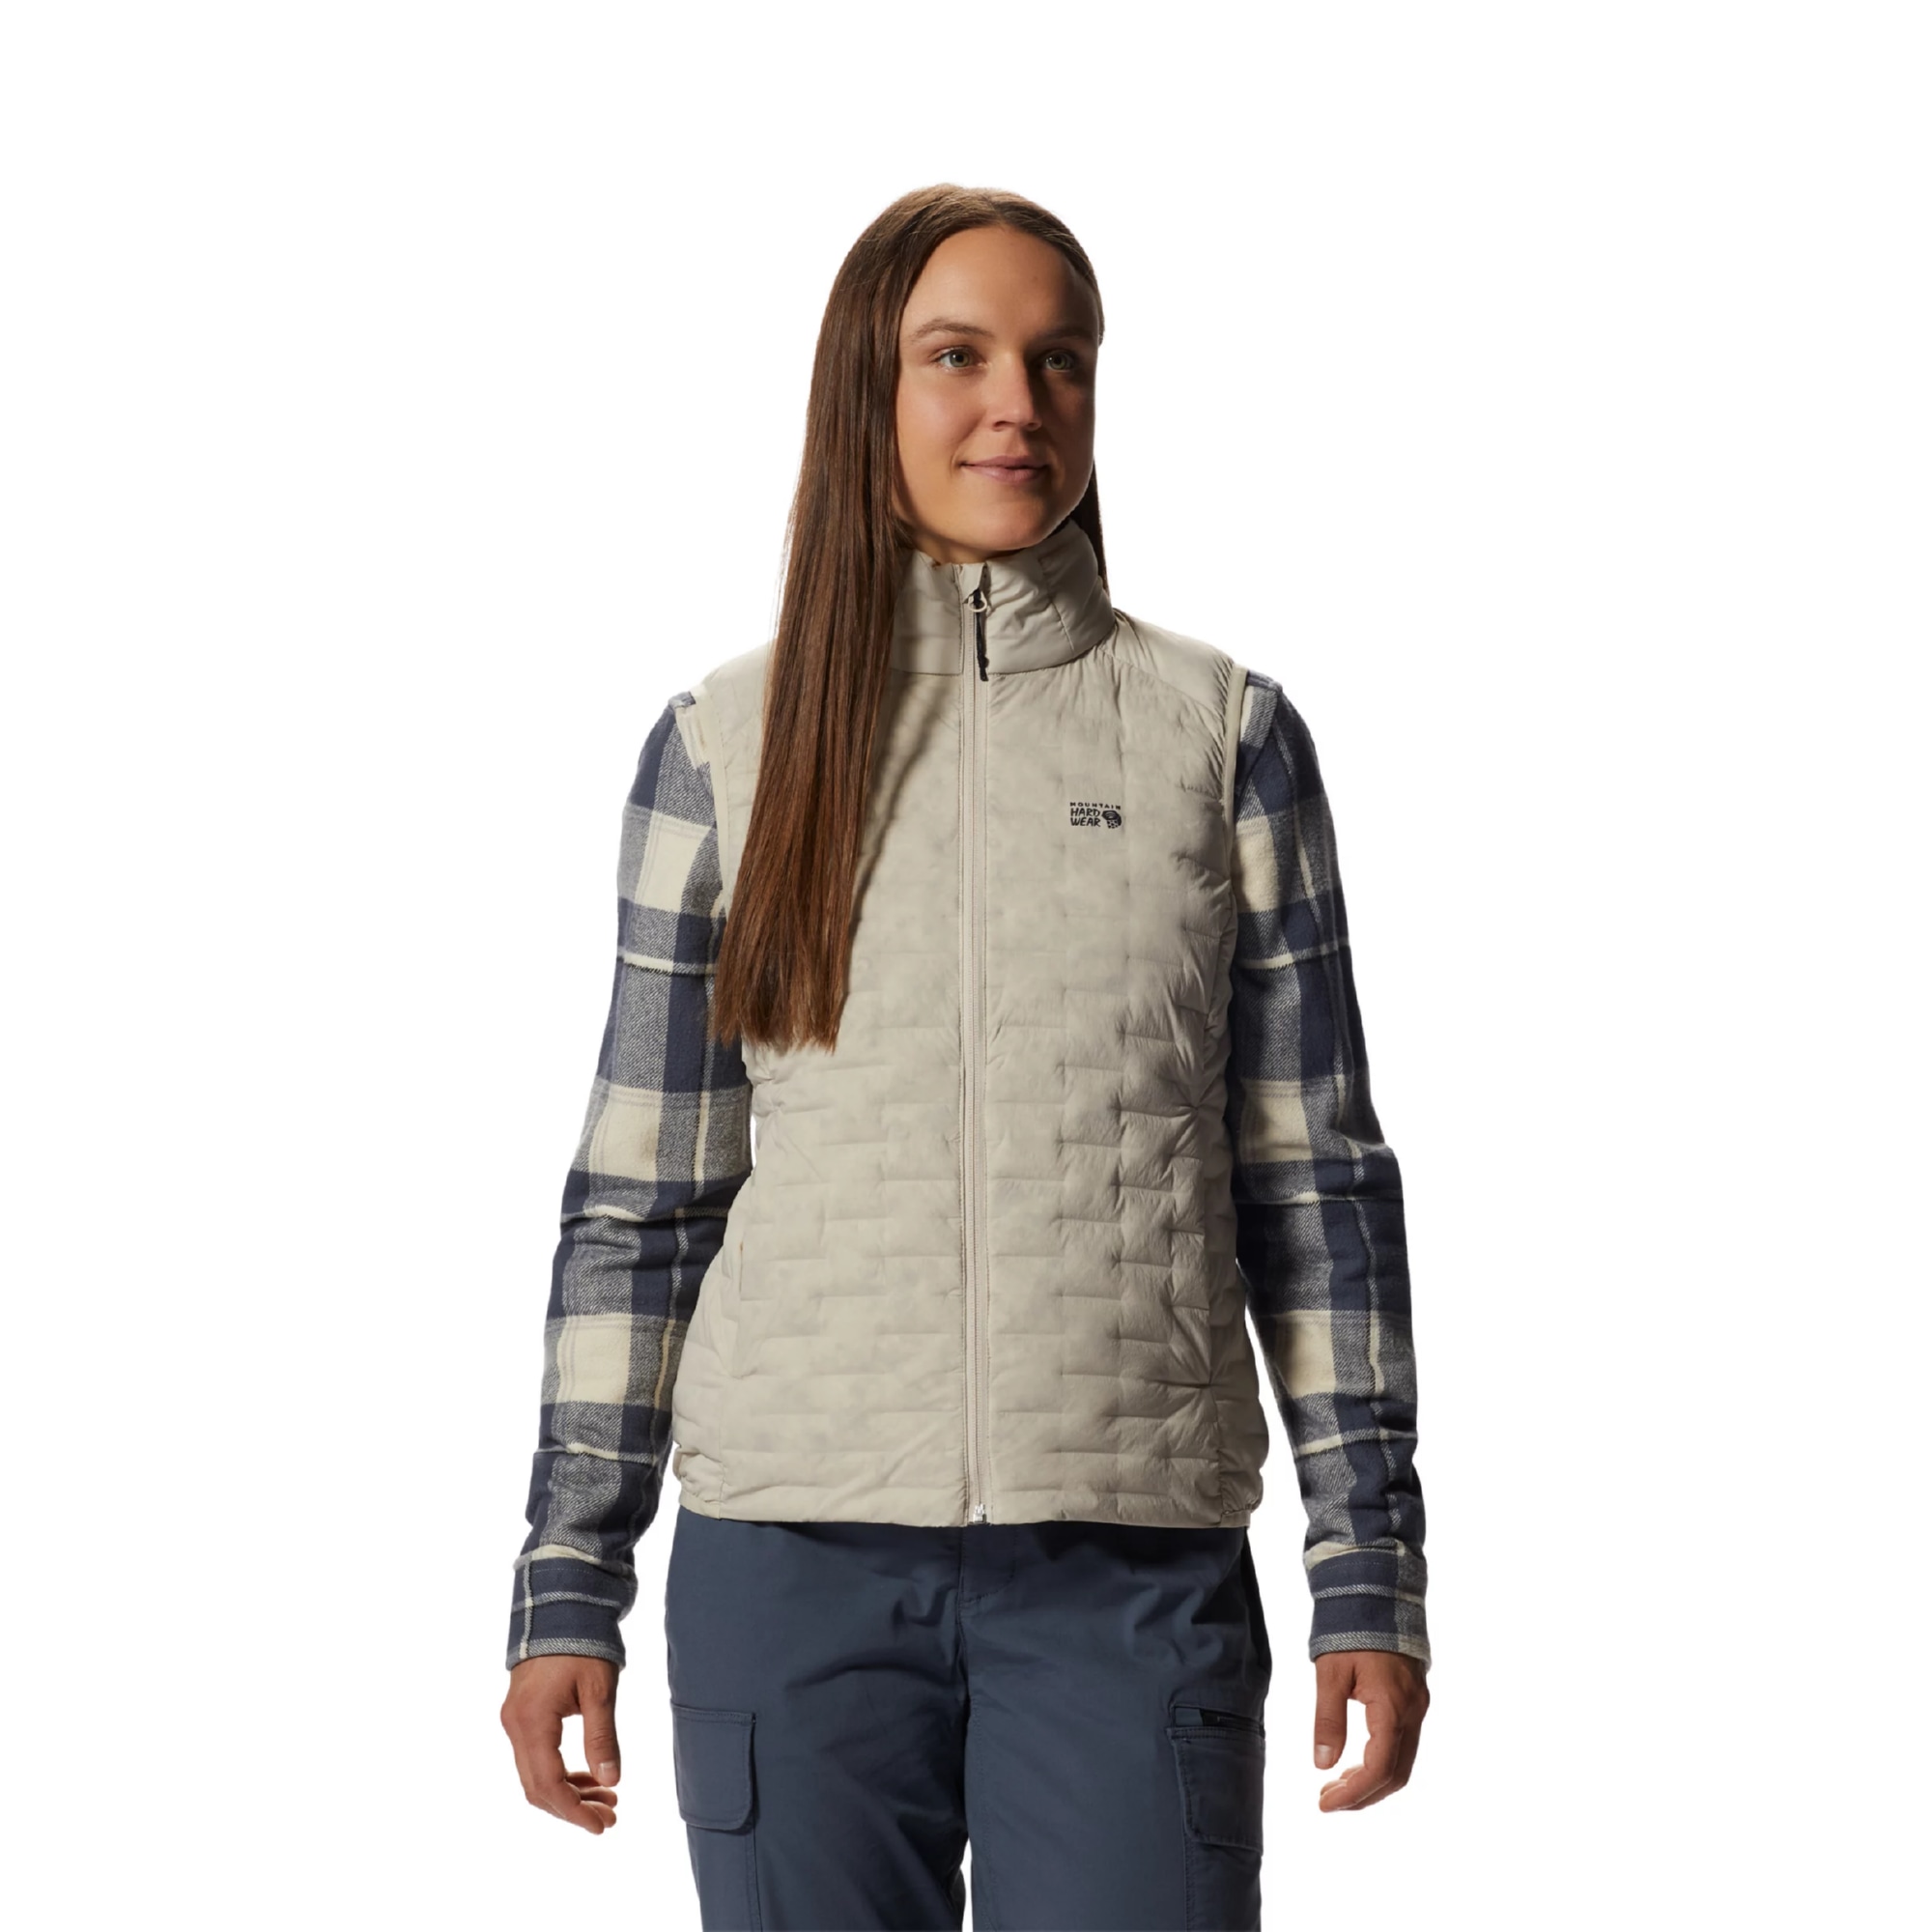 Women's Stretchdown Light Vest